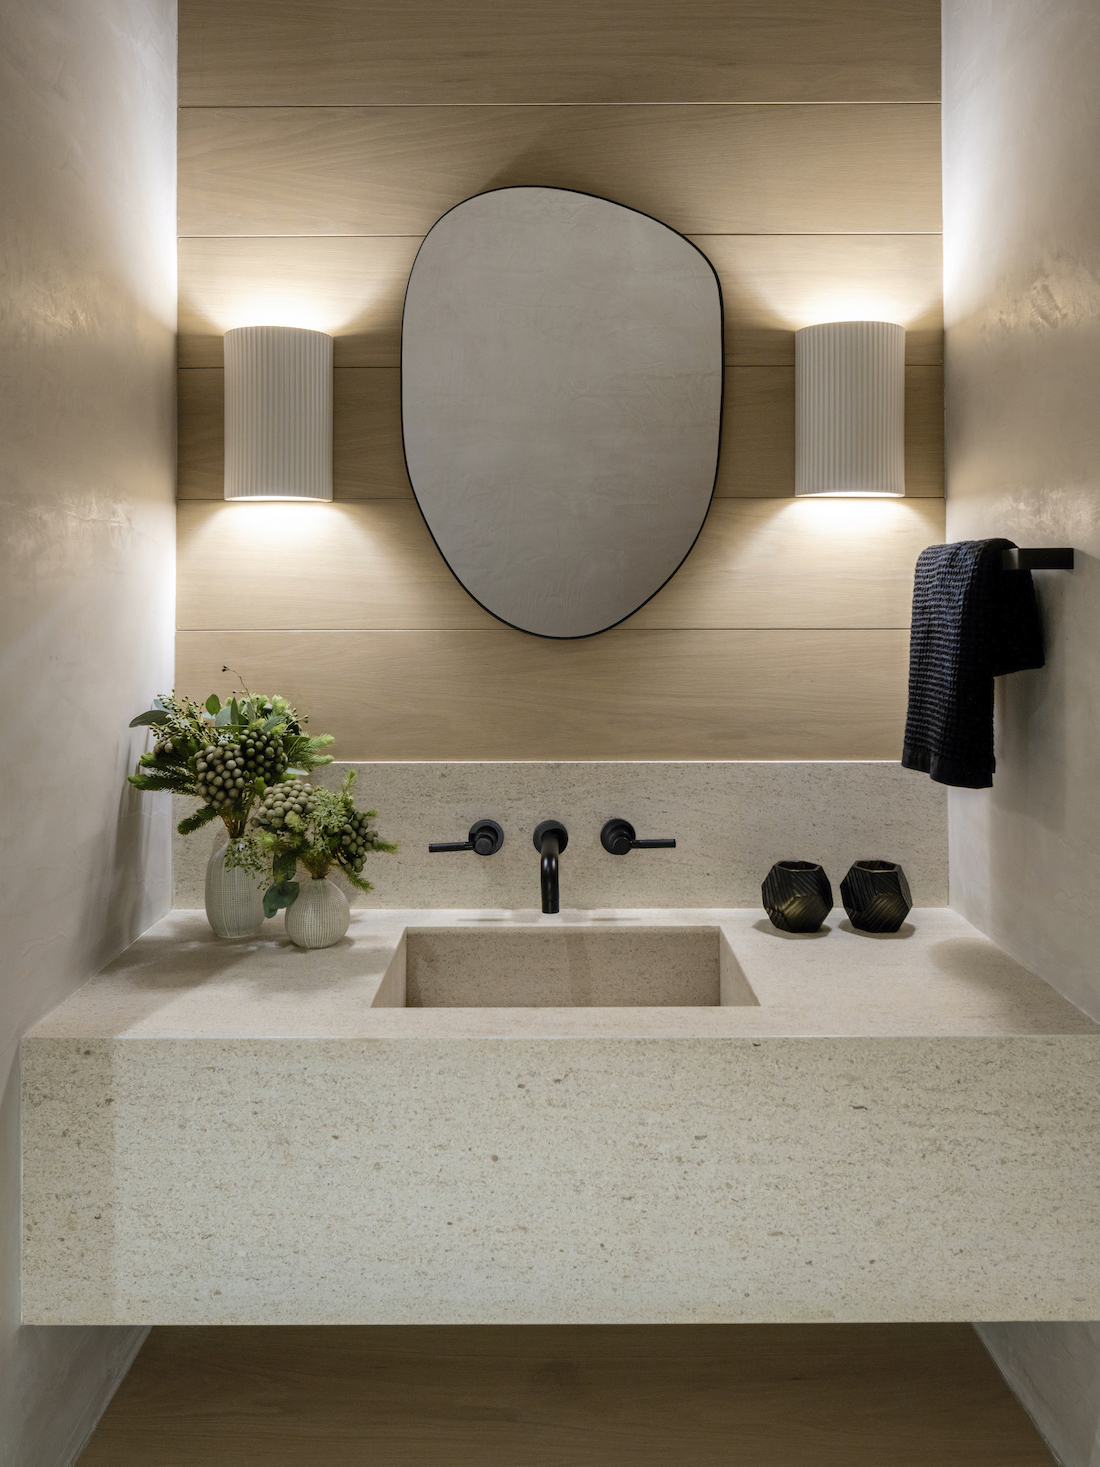 Bathroom interior designed by Studio AK in Effect Magazine